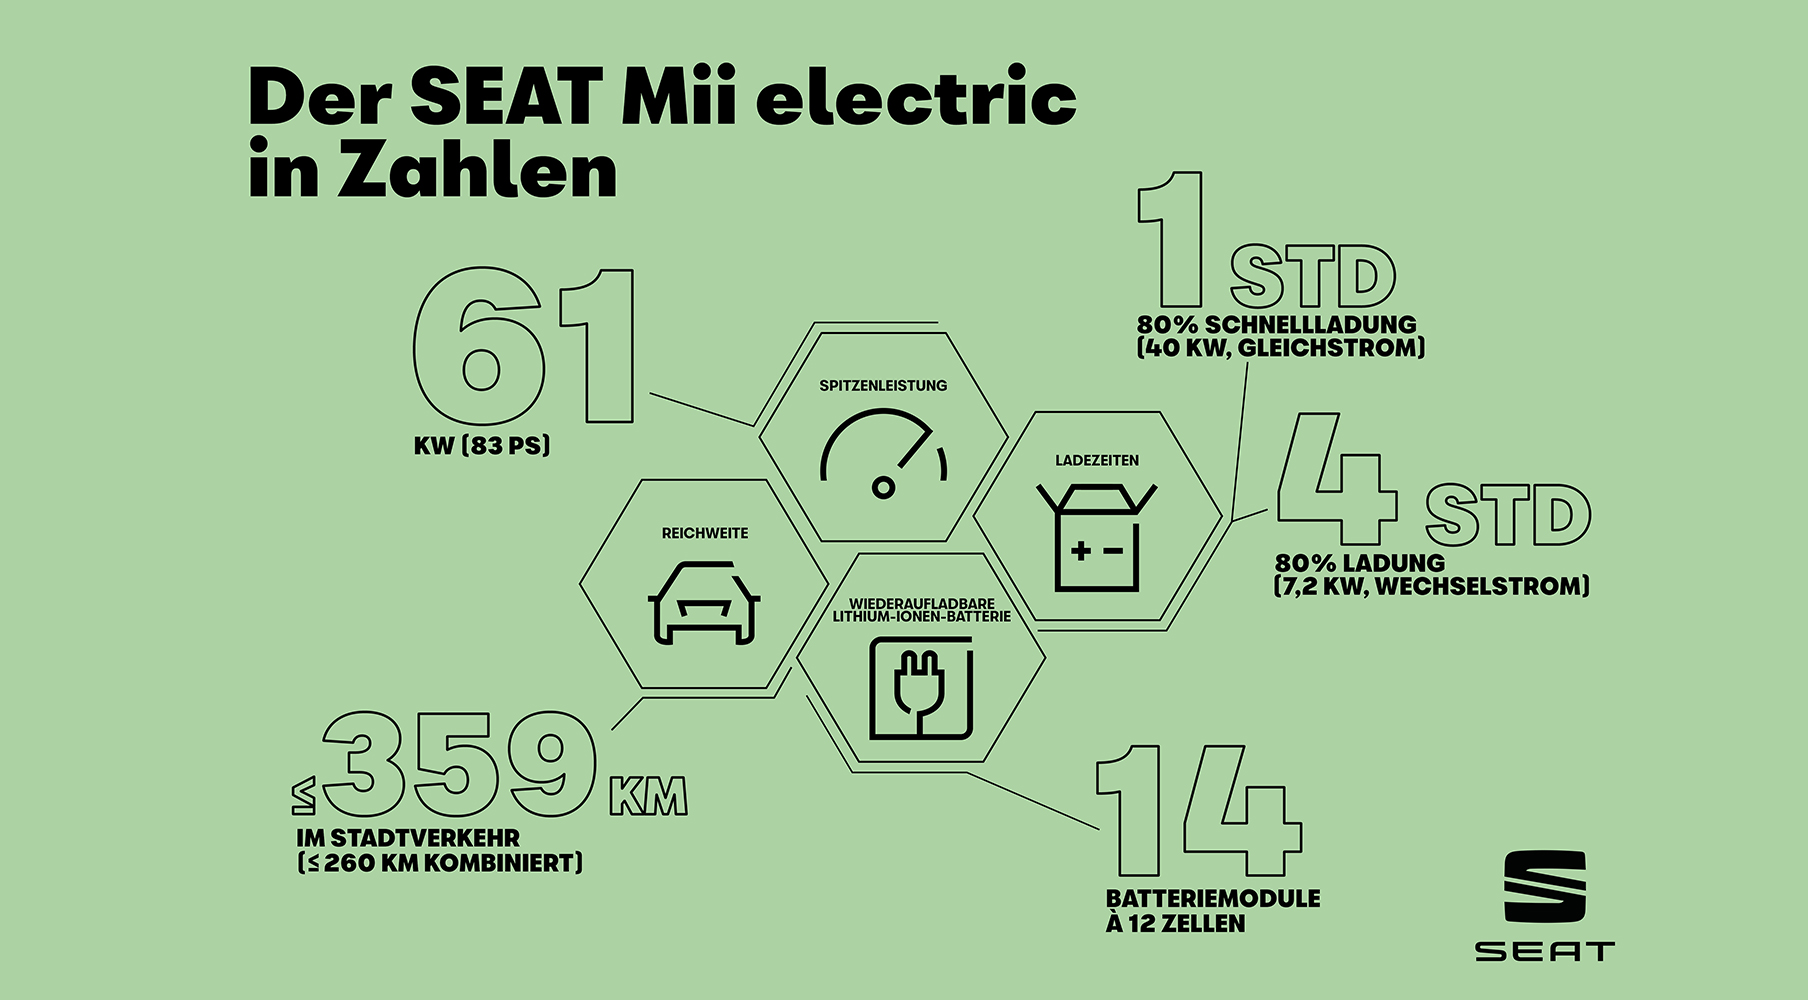 Die Batterien des SEAT Mii electric